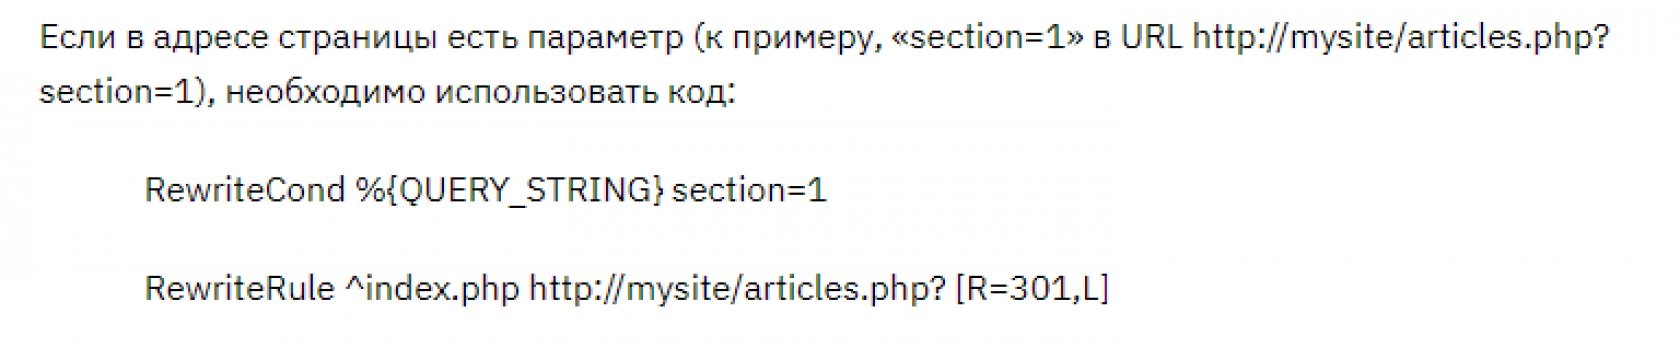 Редирект для URL - с параметрами